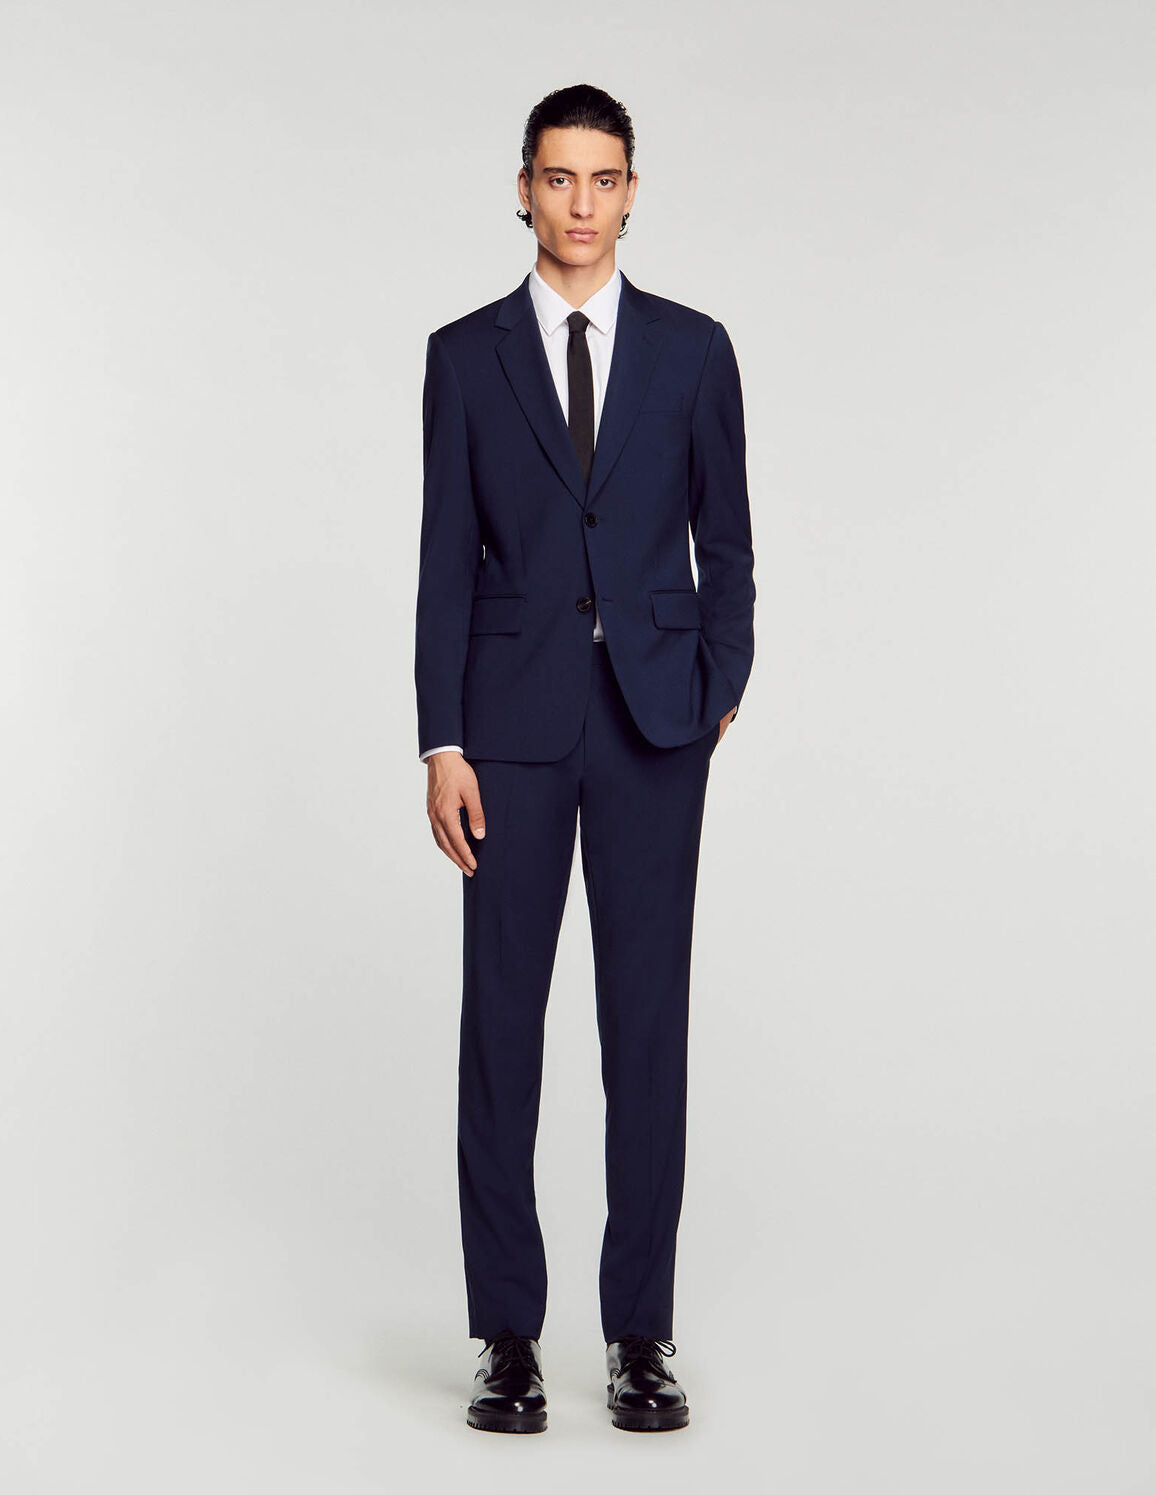 Shop Wool suit jacket for Man - Sandro UAE – Sandro.ae